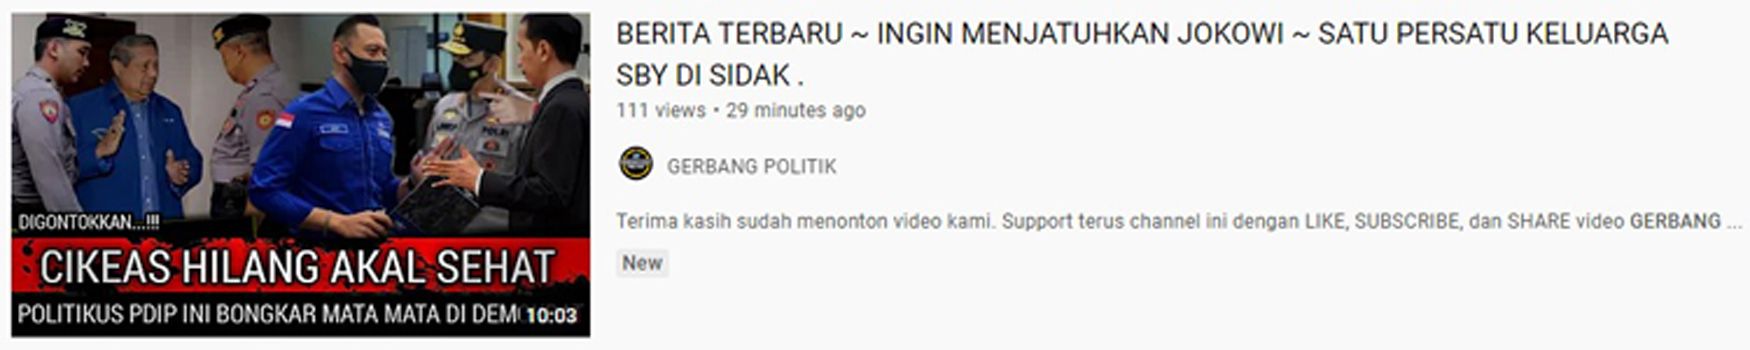 Kabar yang menyebut keluarga SBY disidak karena ingin lengserkan Presiden Jokowi